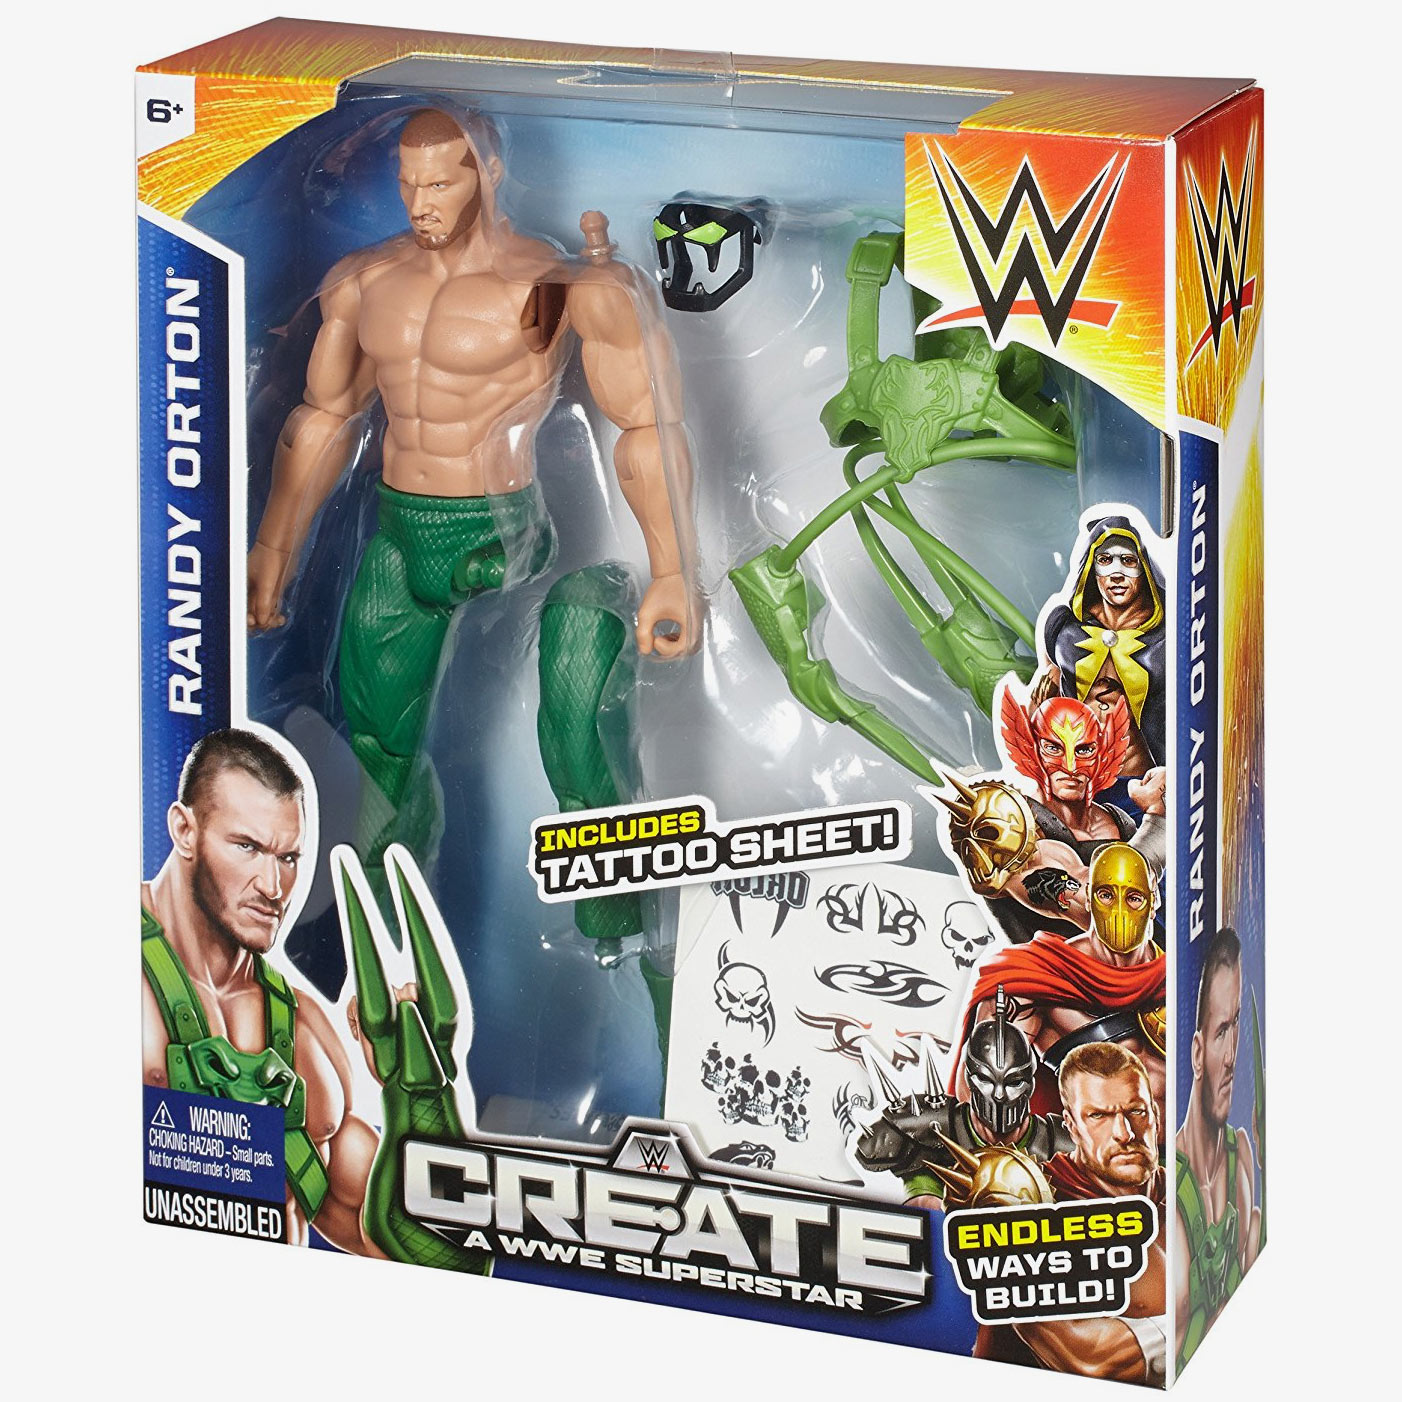 Randy Orton - Create a WWE Superstar (Viper Set)